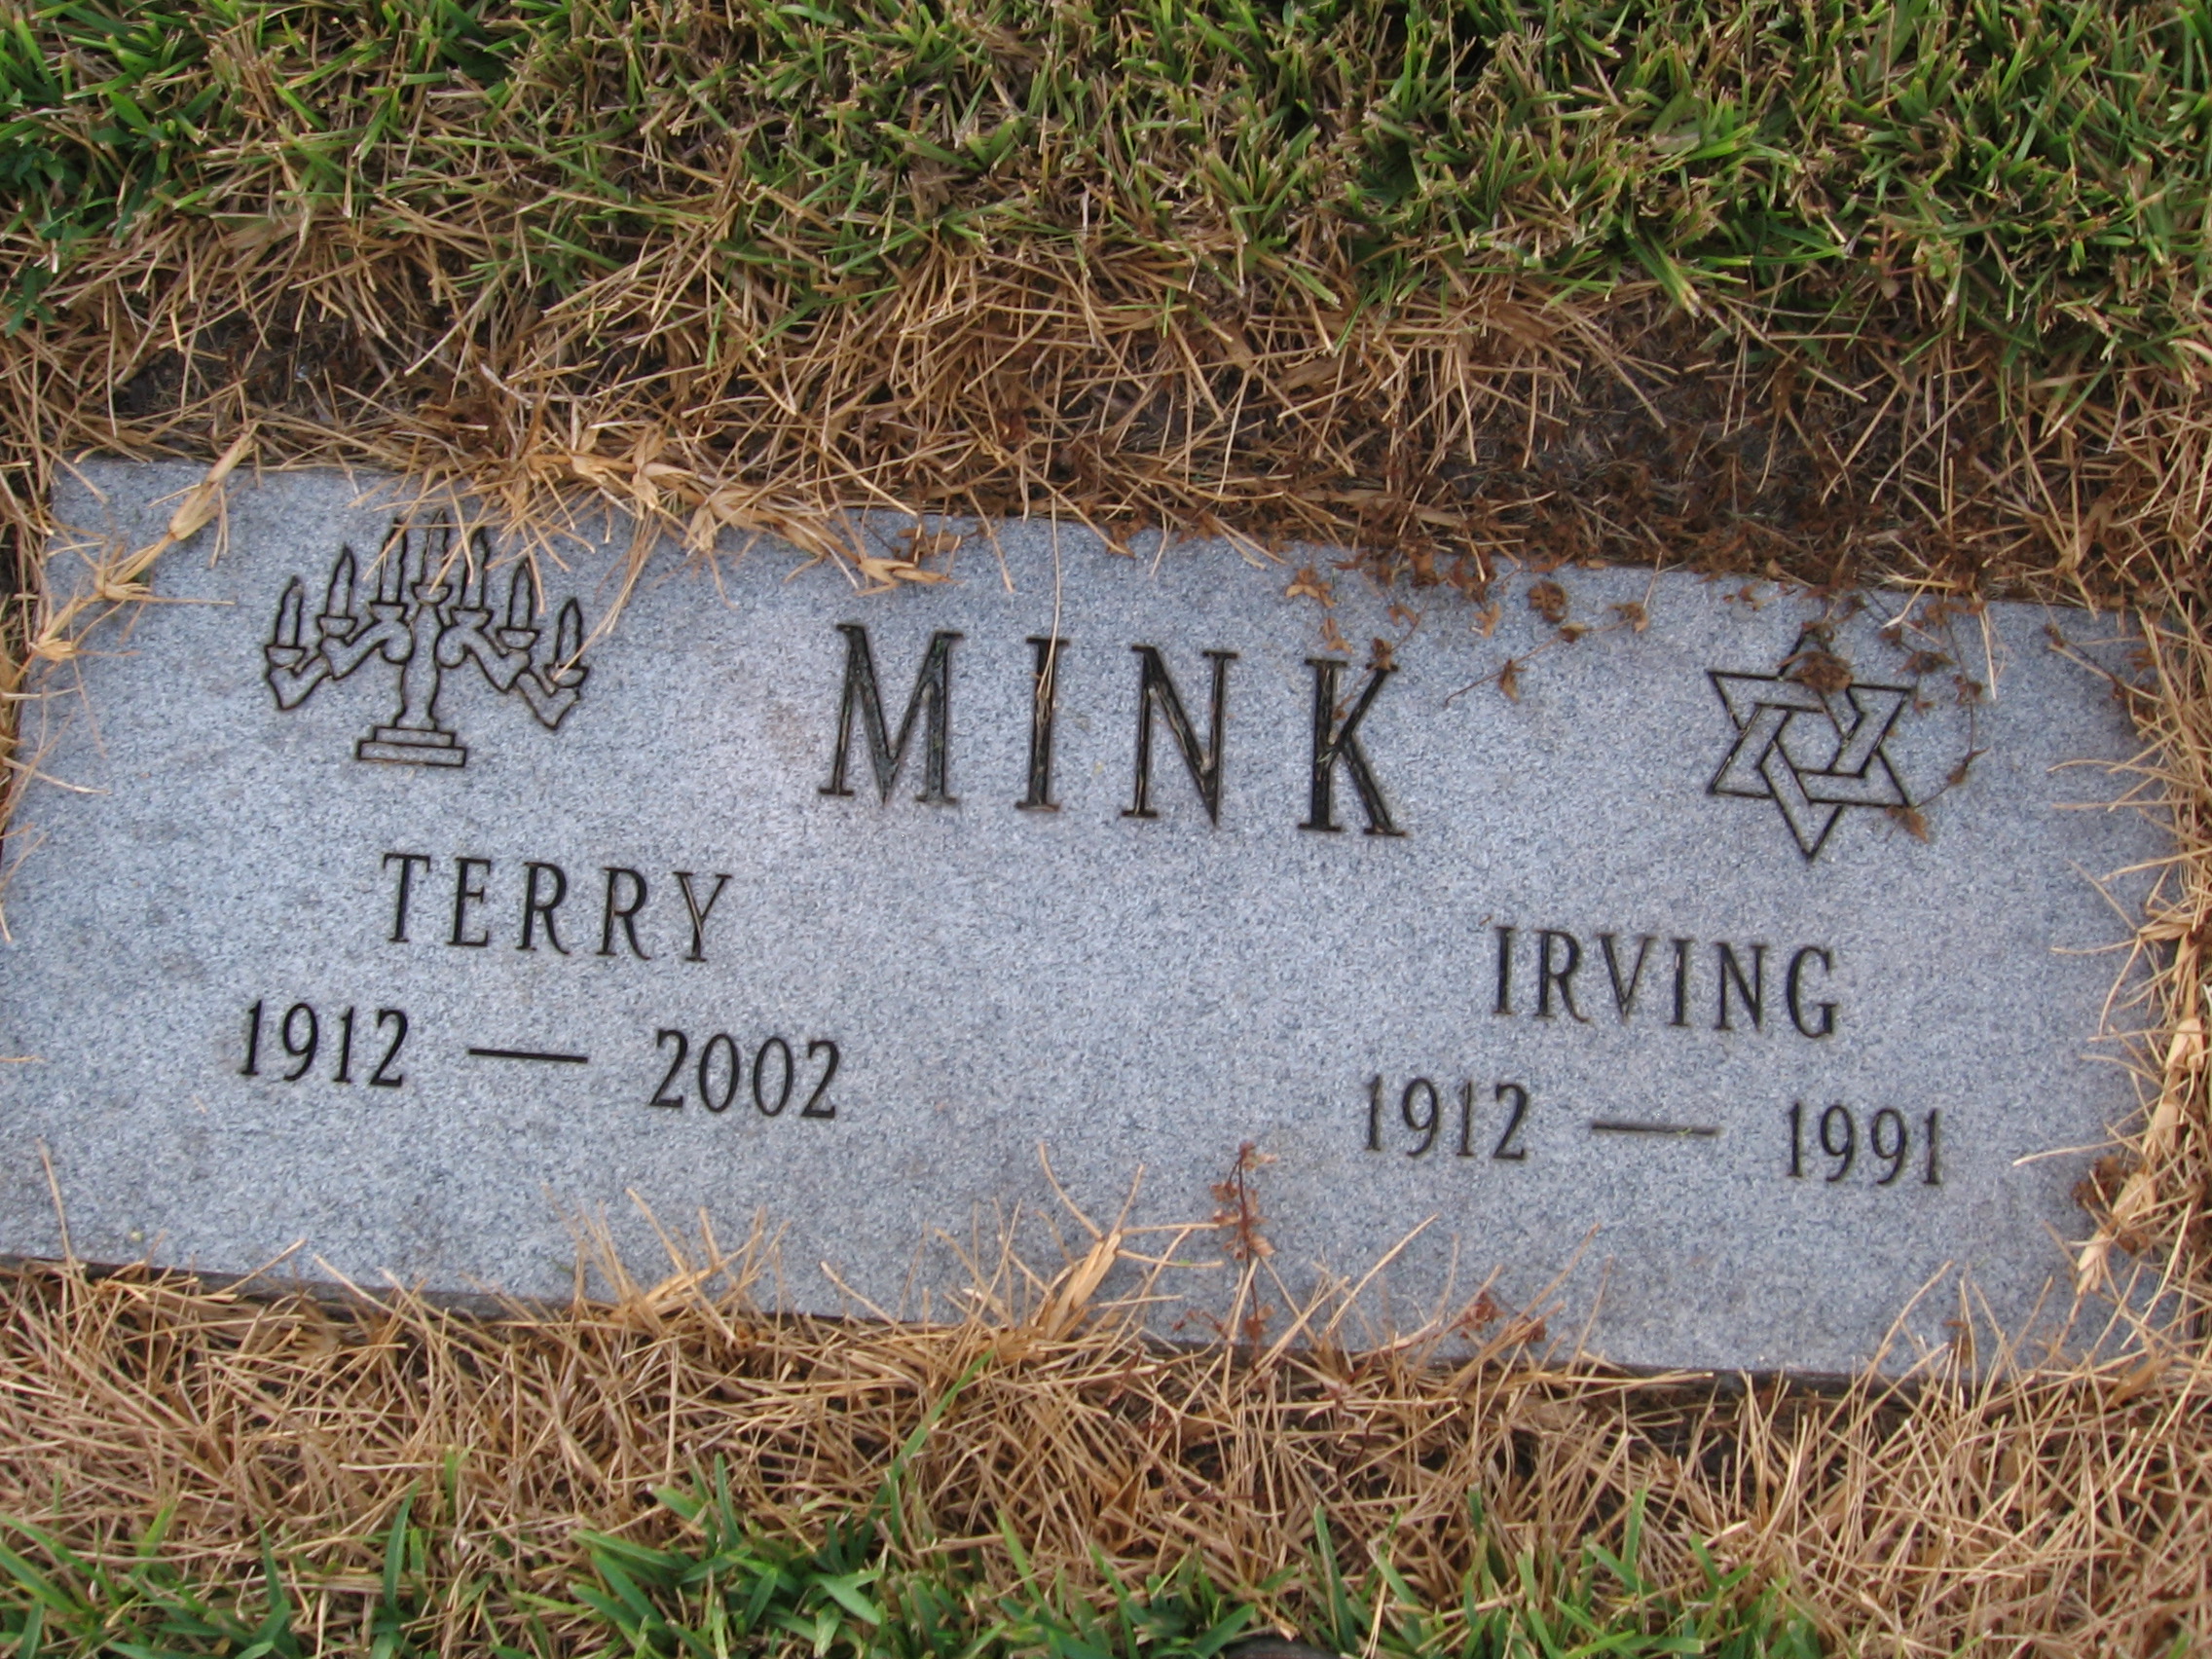 Terry Mink